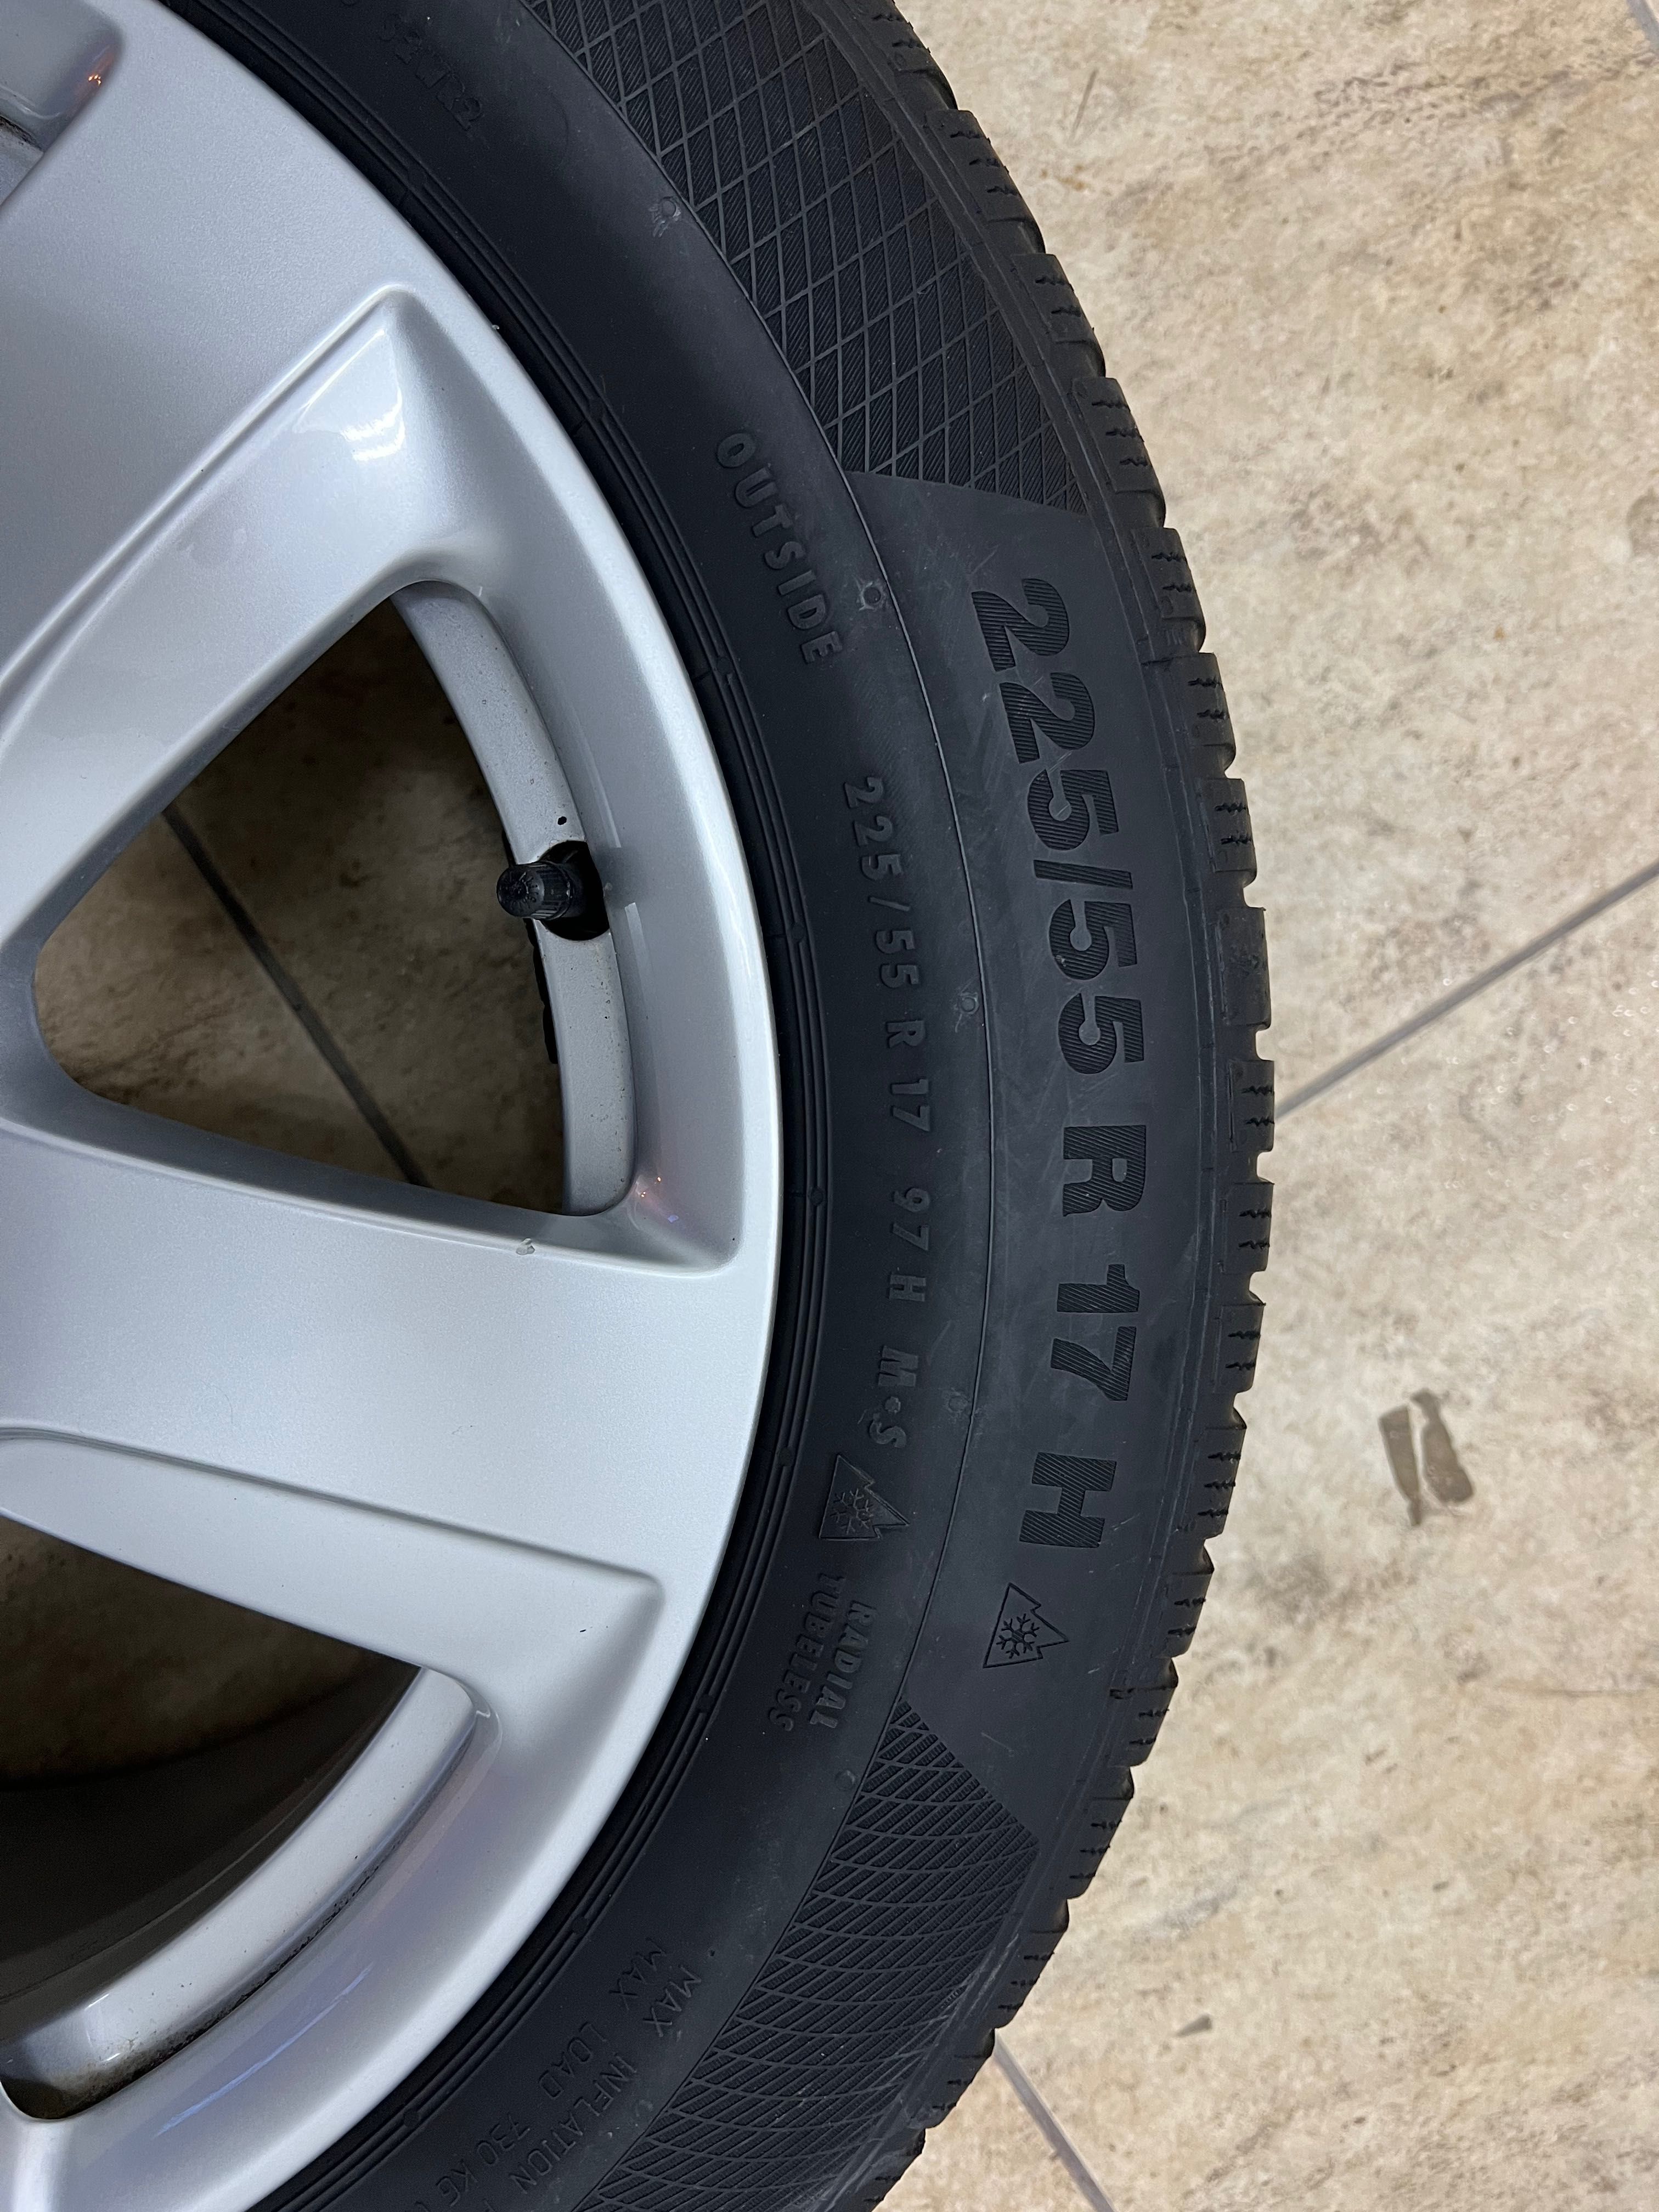 Зимни гуми нови с джанти за Ауди А6 225/55 17